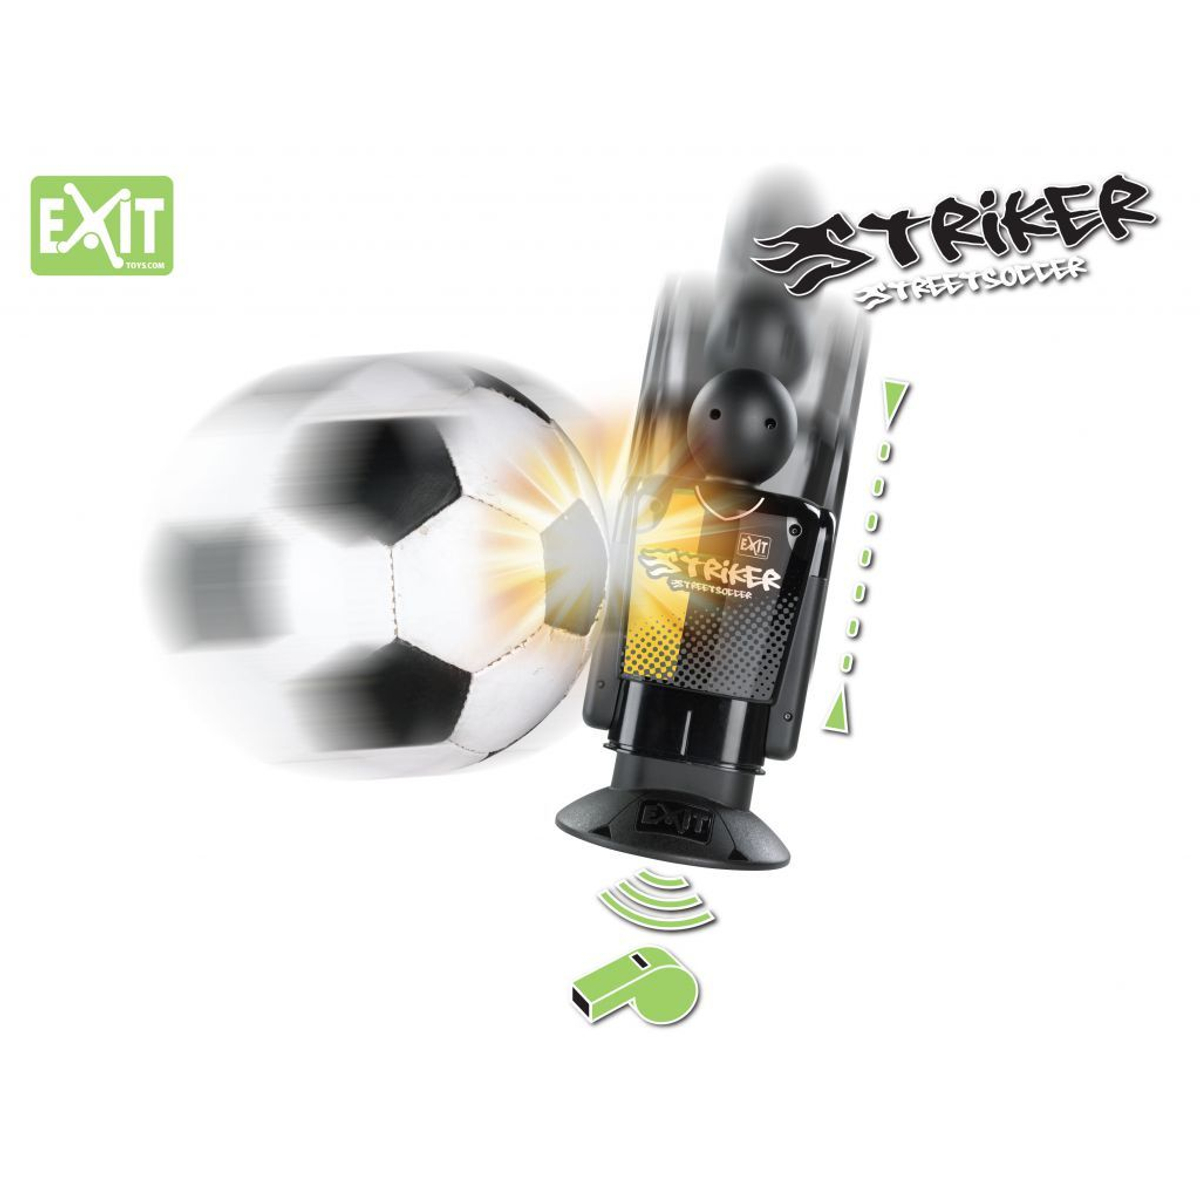 Exit Striker Streetsoccer - Set van 4